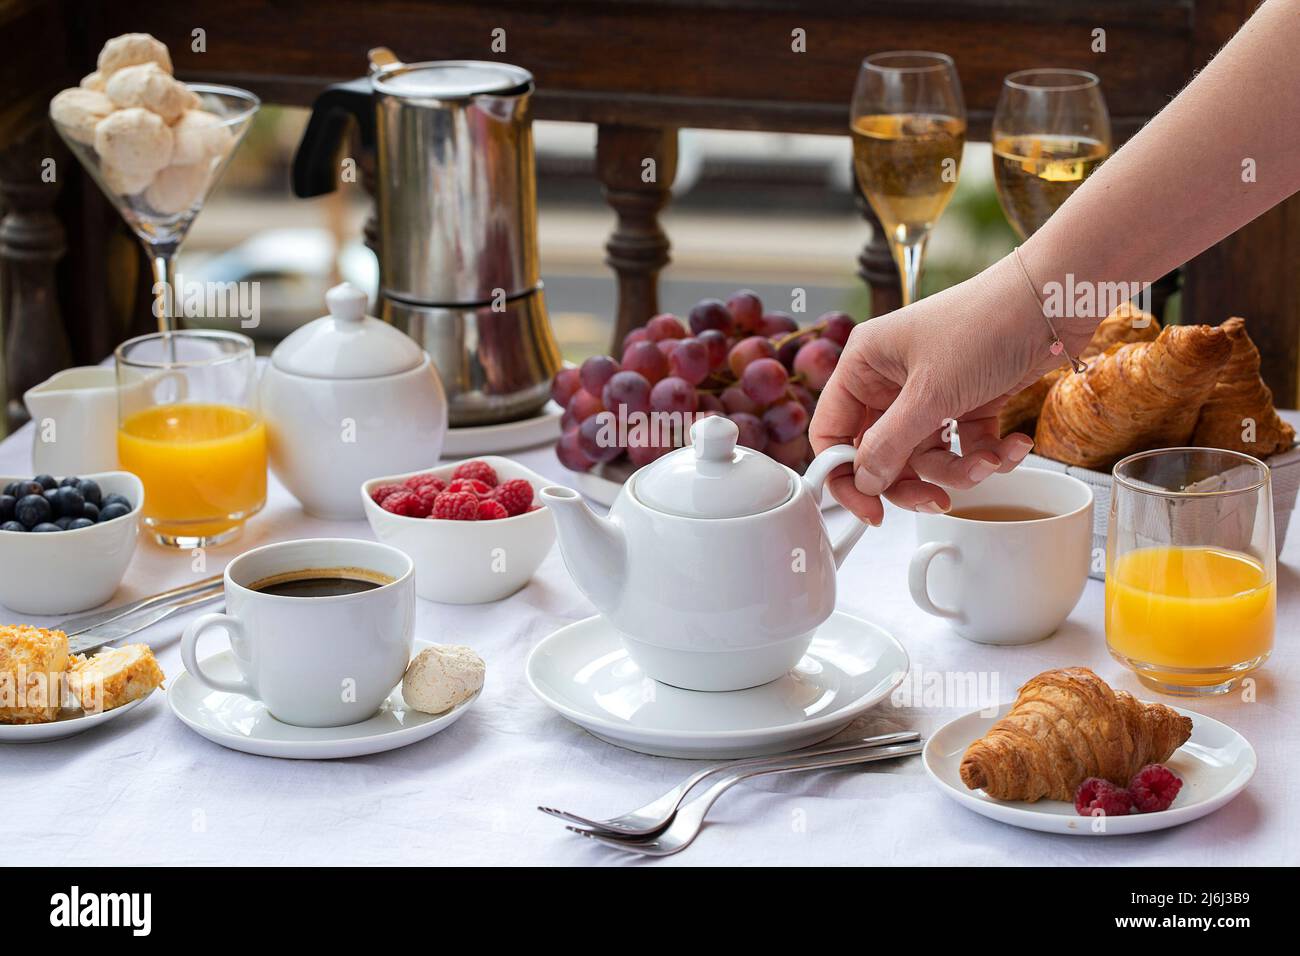 https://c8.alamy.com/comp/2J6J3B9/woman-hand-holding-teapot-for-making-tea-on-hotel-terrace-luxury-breakfast-coffee-maker-teapot-cups-croissants-fruits-orange-juice-and-champagn-2J6J3B9.jpg